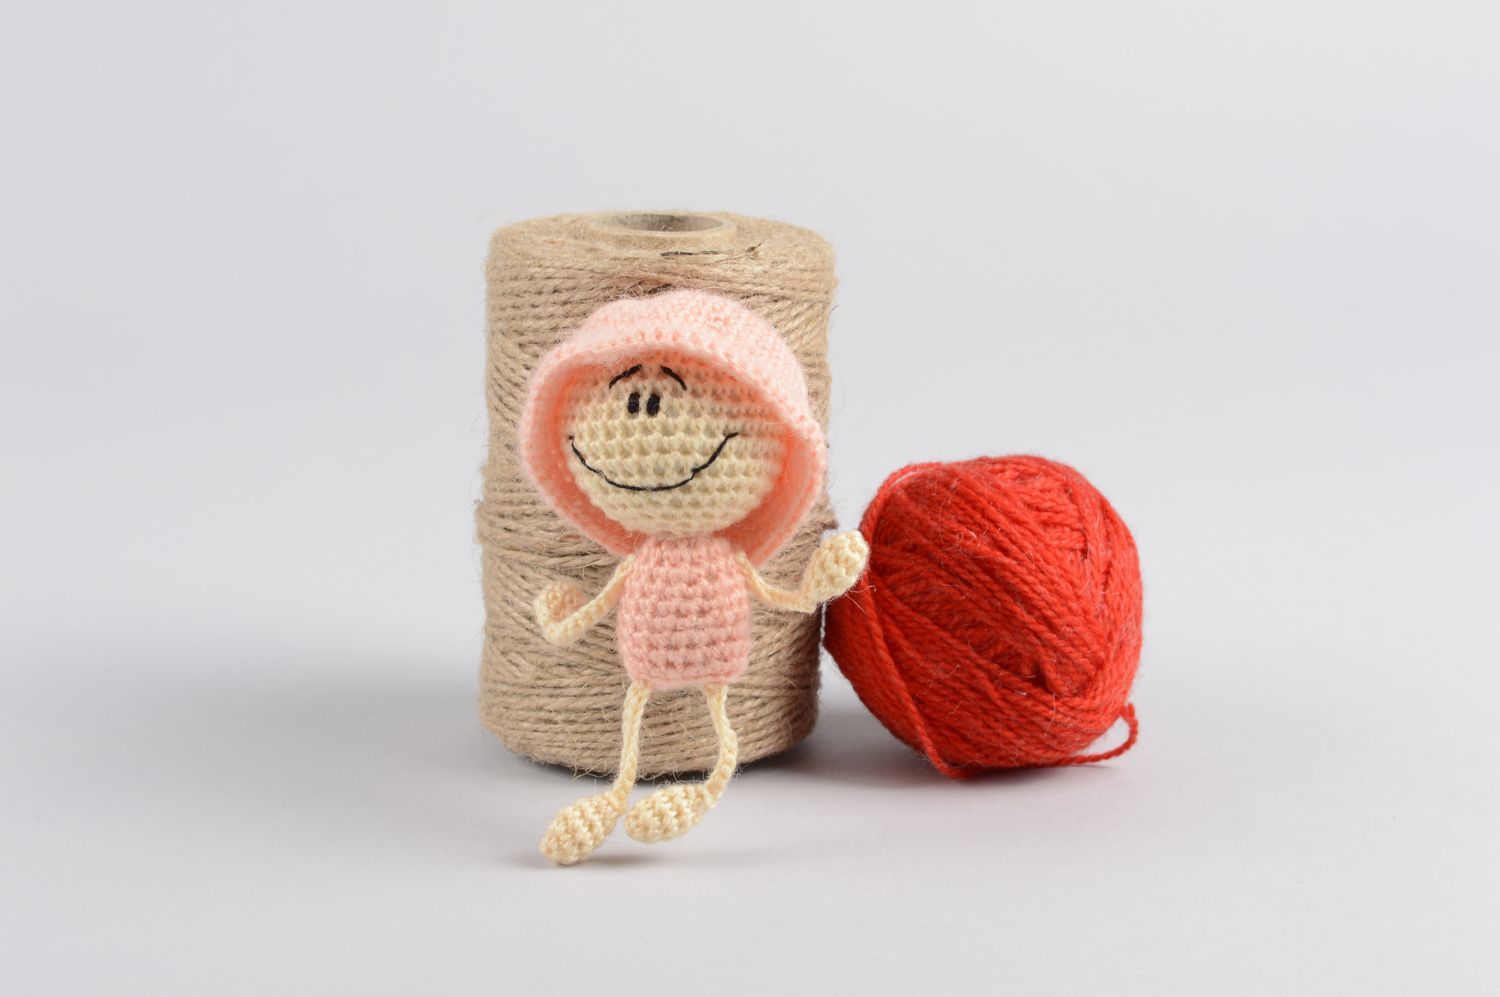 Nice handmade soft toy crochet toy stuffed toy for kids birthday gift ideas photo 5